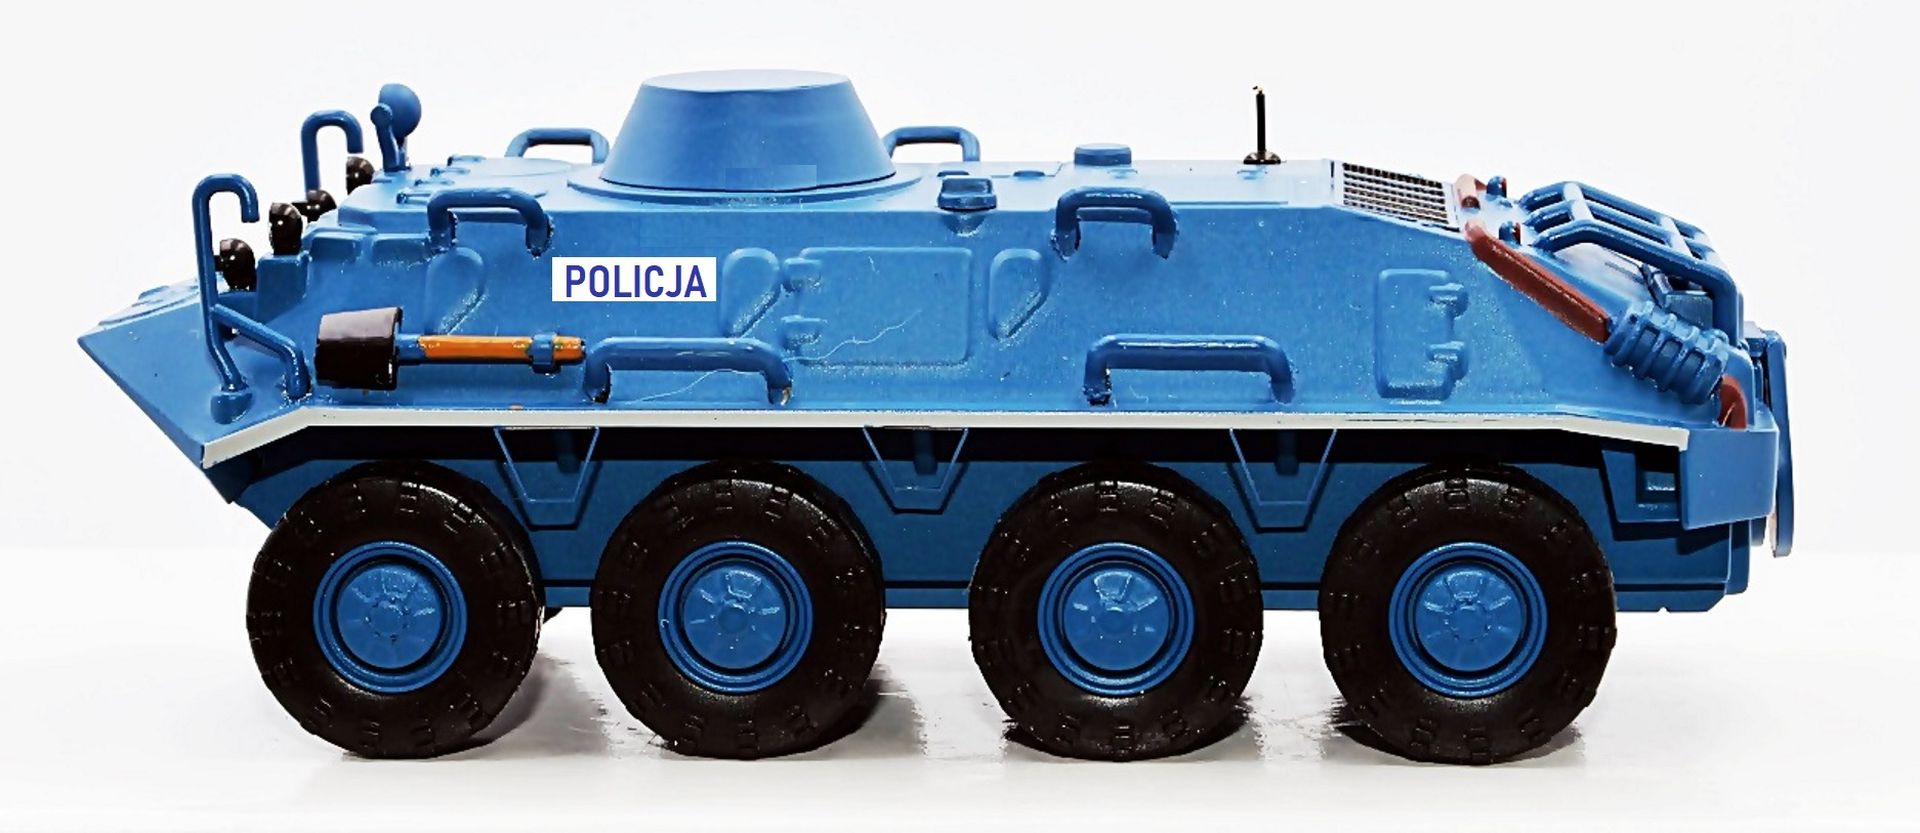 NPE-Modellbau NA88267 - Schützenpanzer BTR 60 PB Polen POLICJA - blau